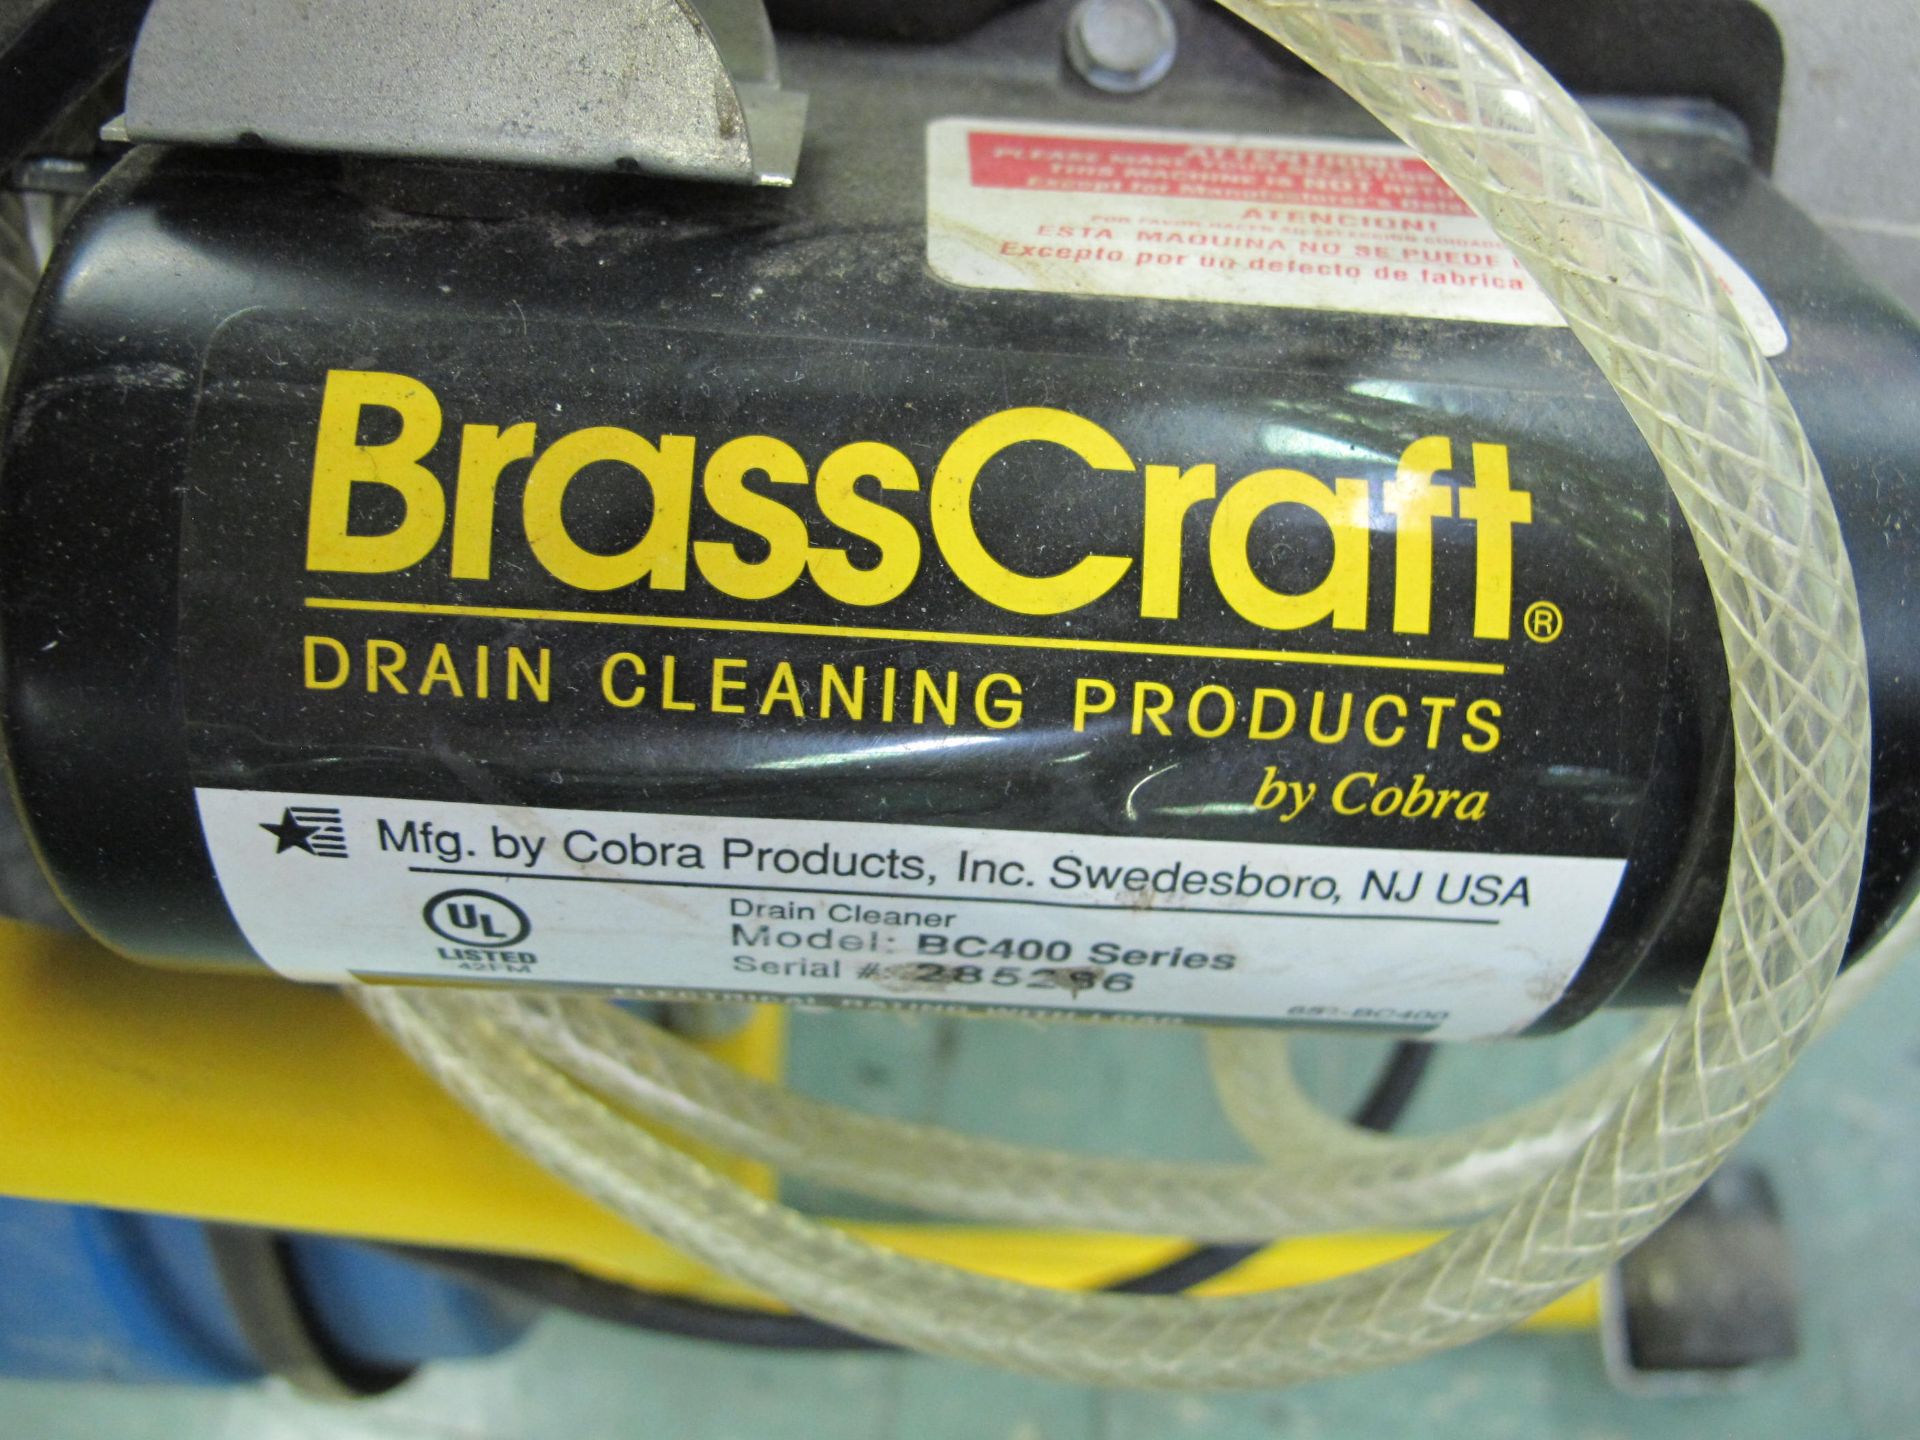 COBRA BRASSCRAFT DRAIN CLEANER, MODEL BC400, SERIAL 285286 - Image 2 of 2